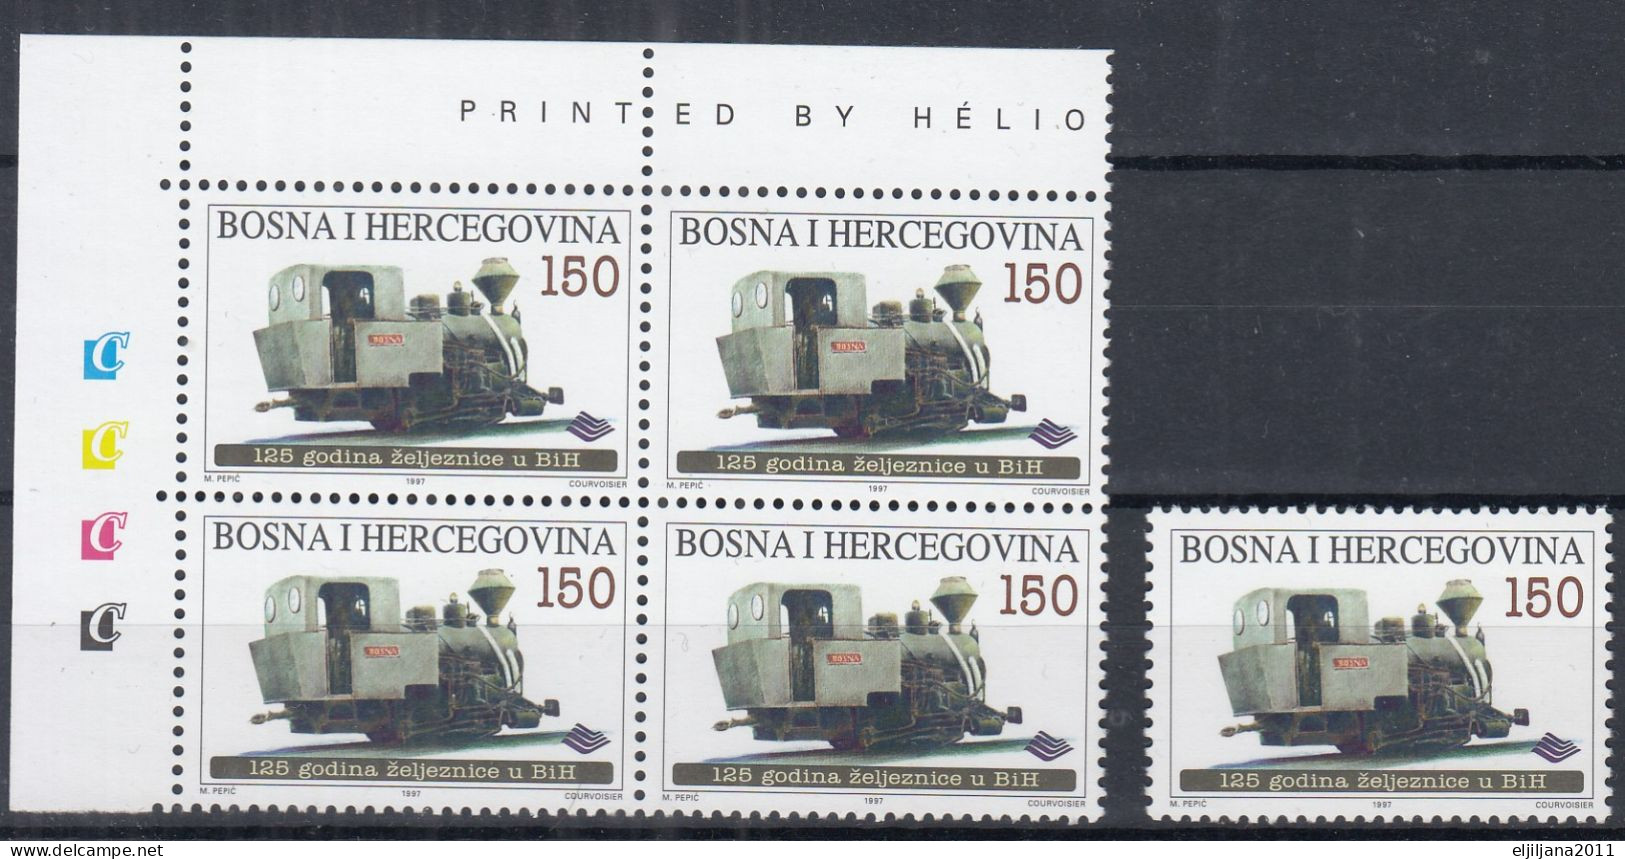 BOSNA I HERCEGOVINA 1997 Bosnia And Hercegovina ⁕ 125 Years Of Railways In BiH Mi. 97 ⁕ 4 + 1v MNH - Bosnia And Herzegovina